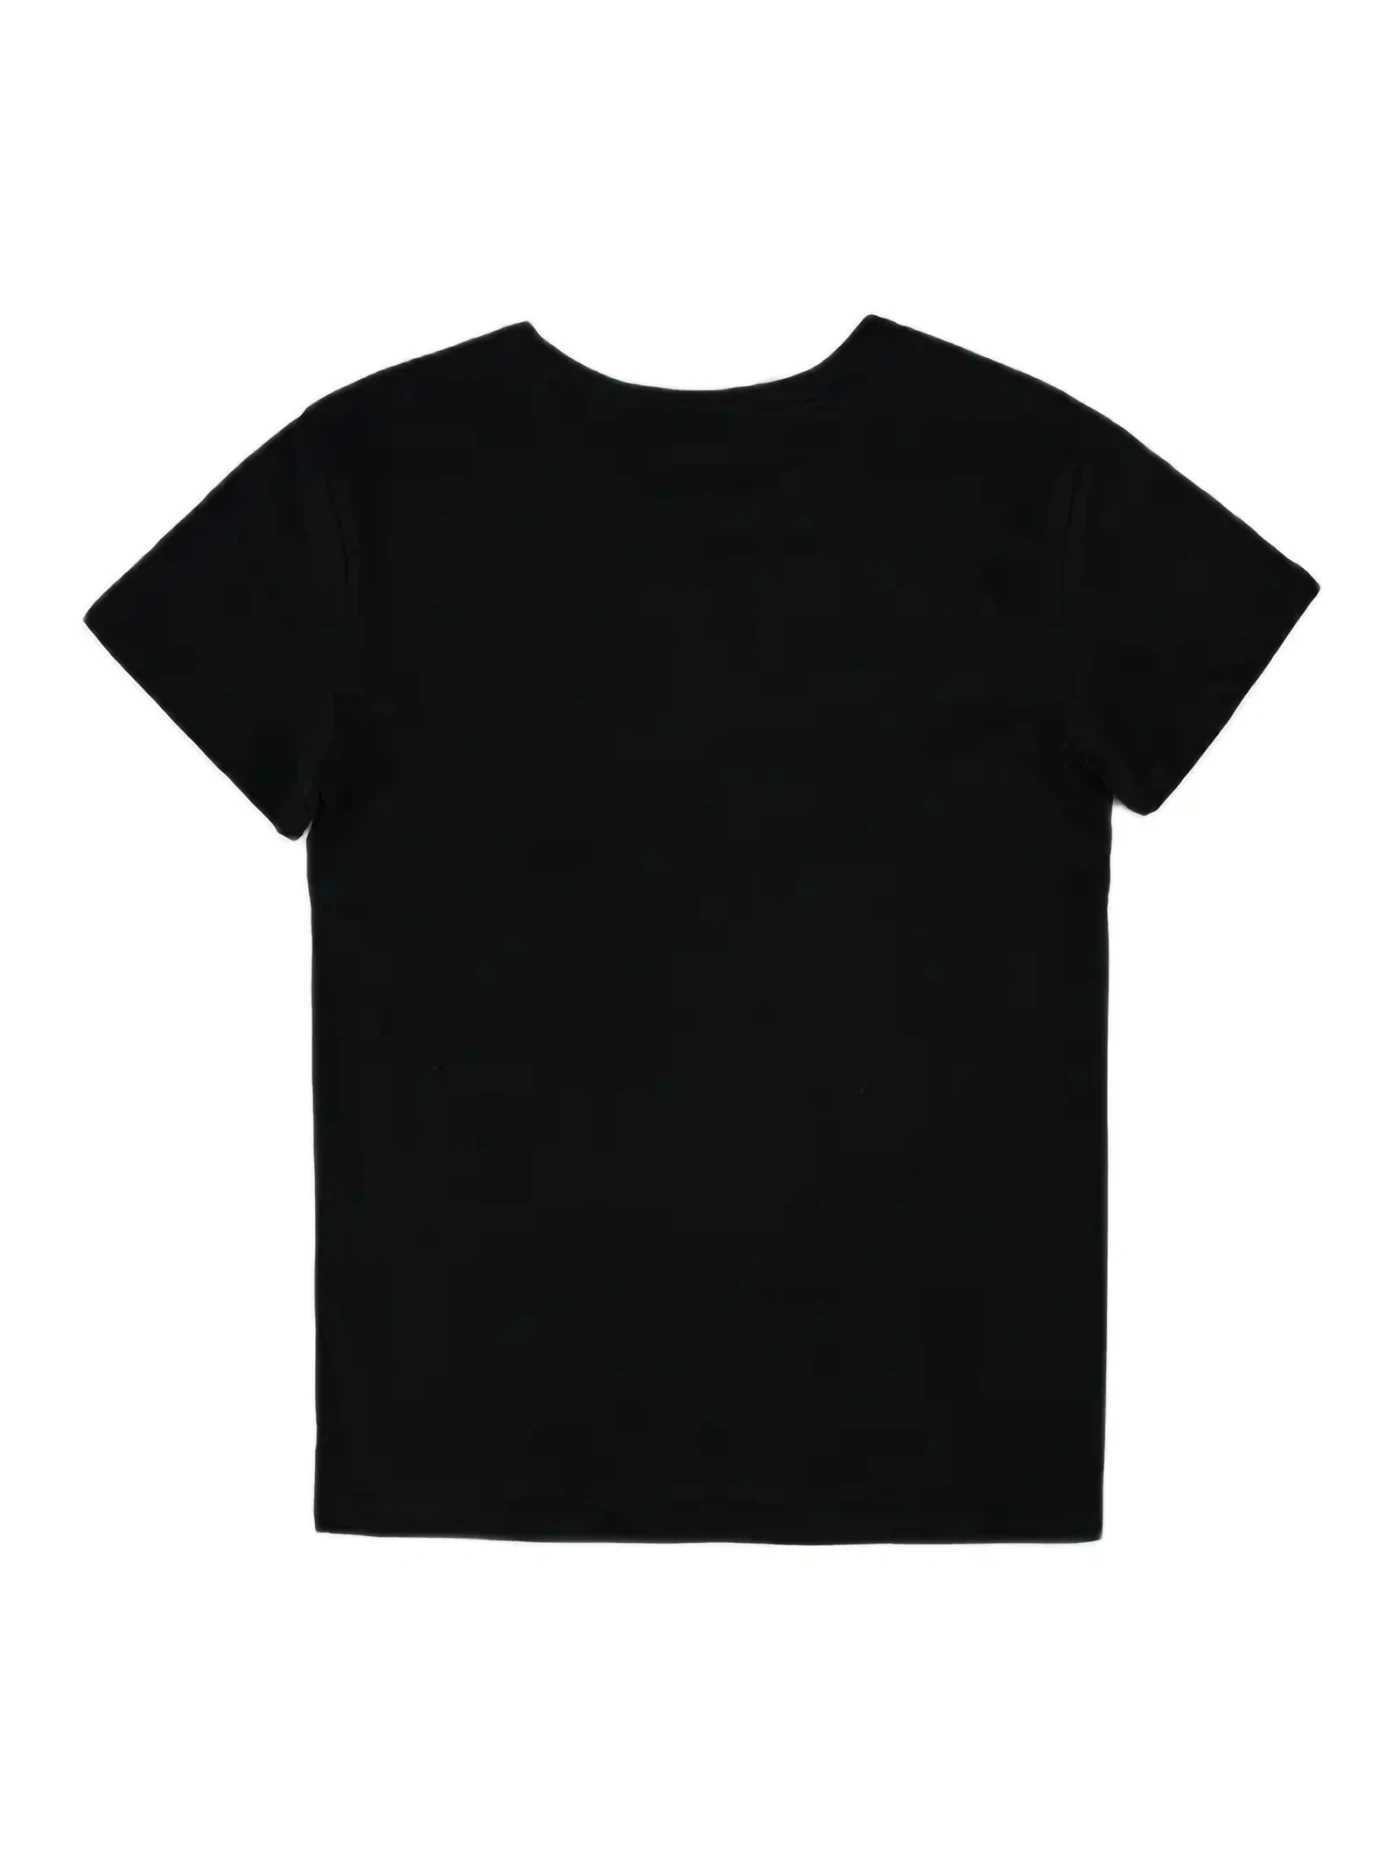 T-shirt féminin US T-shirt t-shirt pour femmes T-shirt t-shirt pour femmes courte à manches à manches